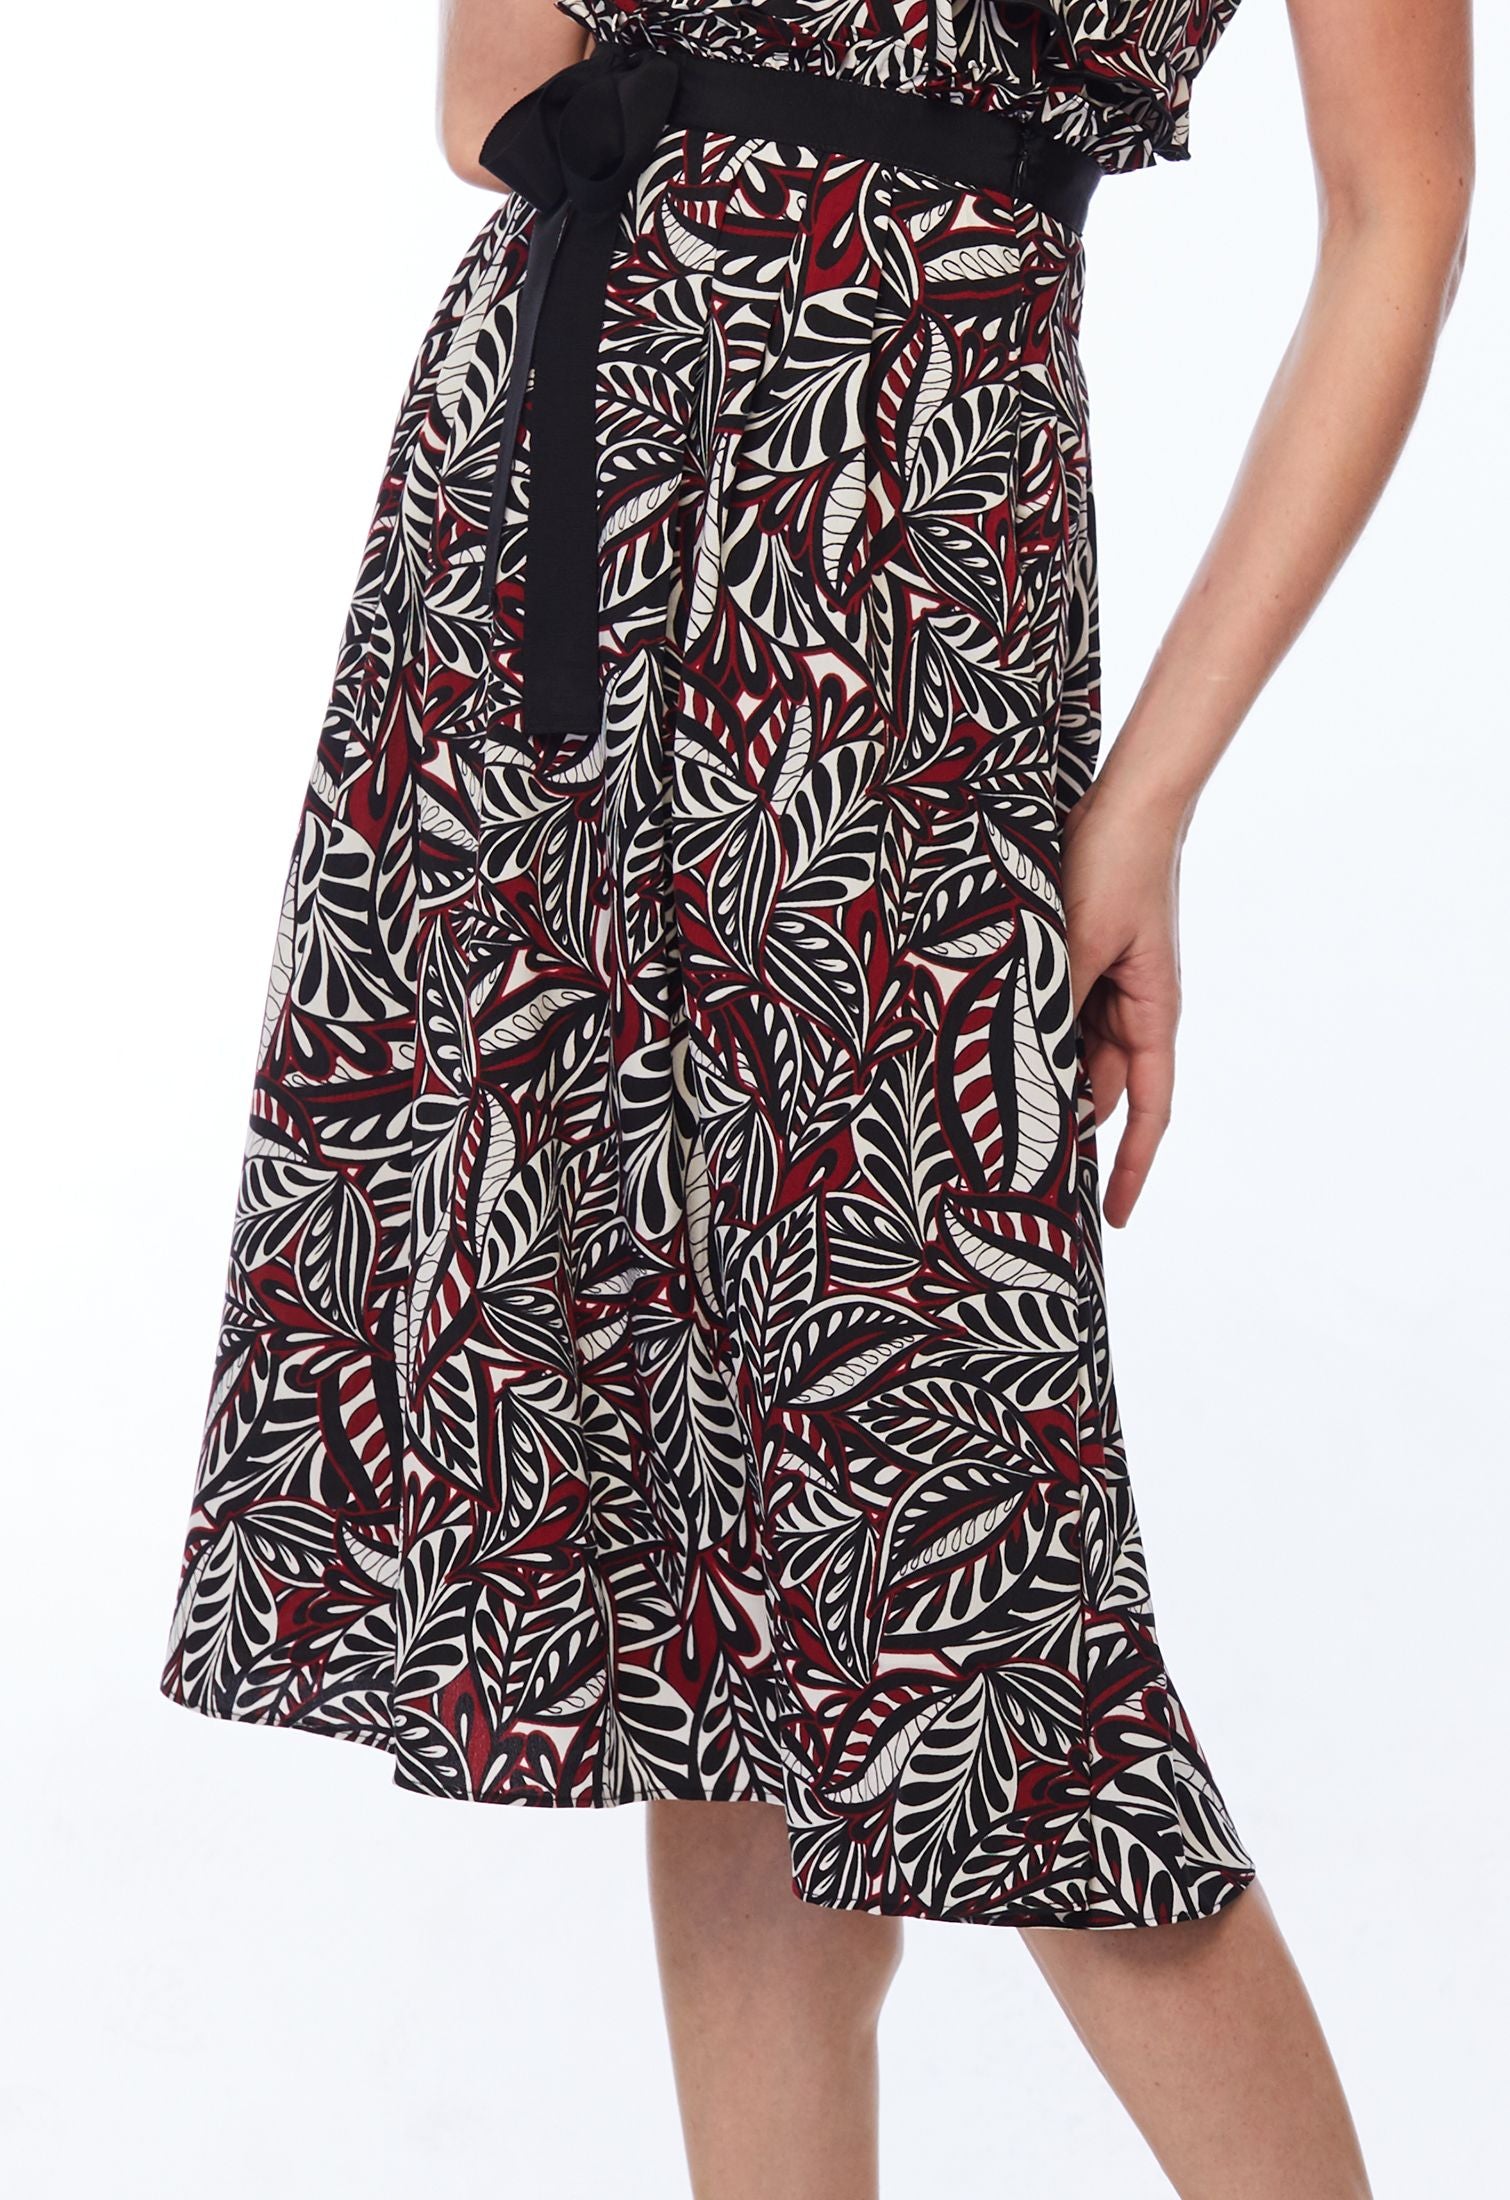 Paisley Print Skirt with Tie